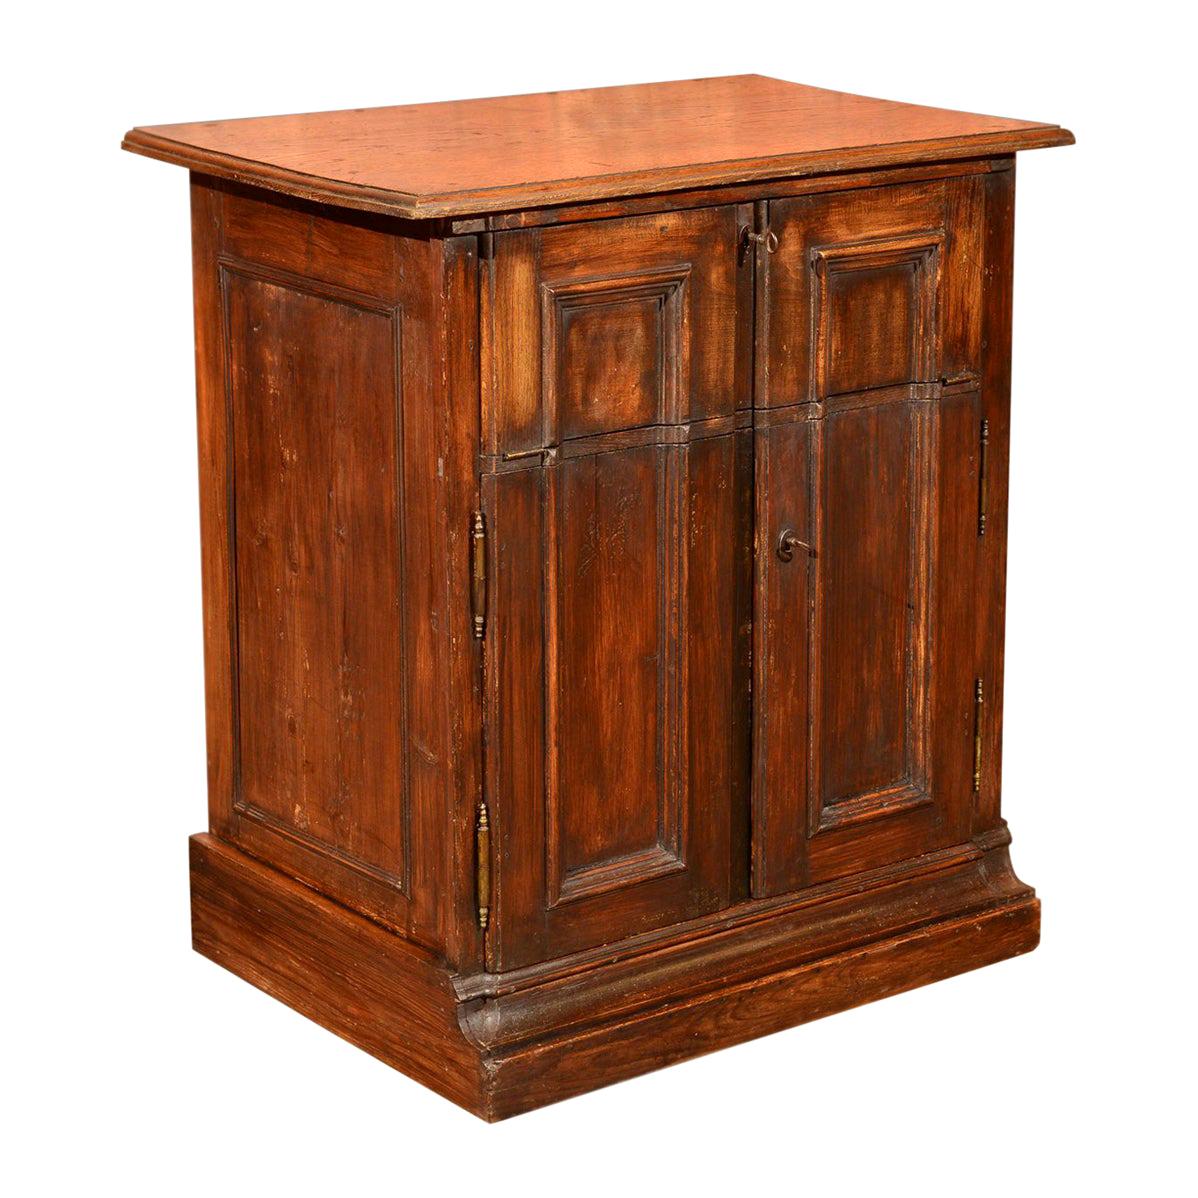 Antique Specimen Cabinet, French Oak Cupboard, Secretaire, Desk, circa 1850 For Sale